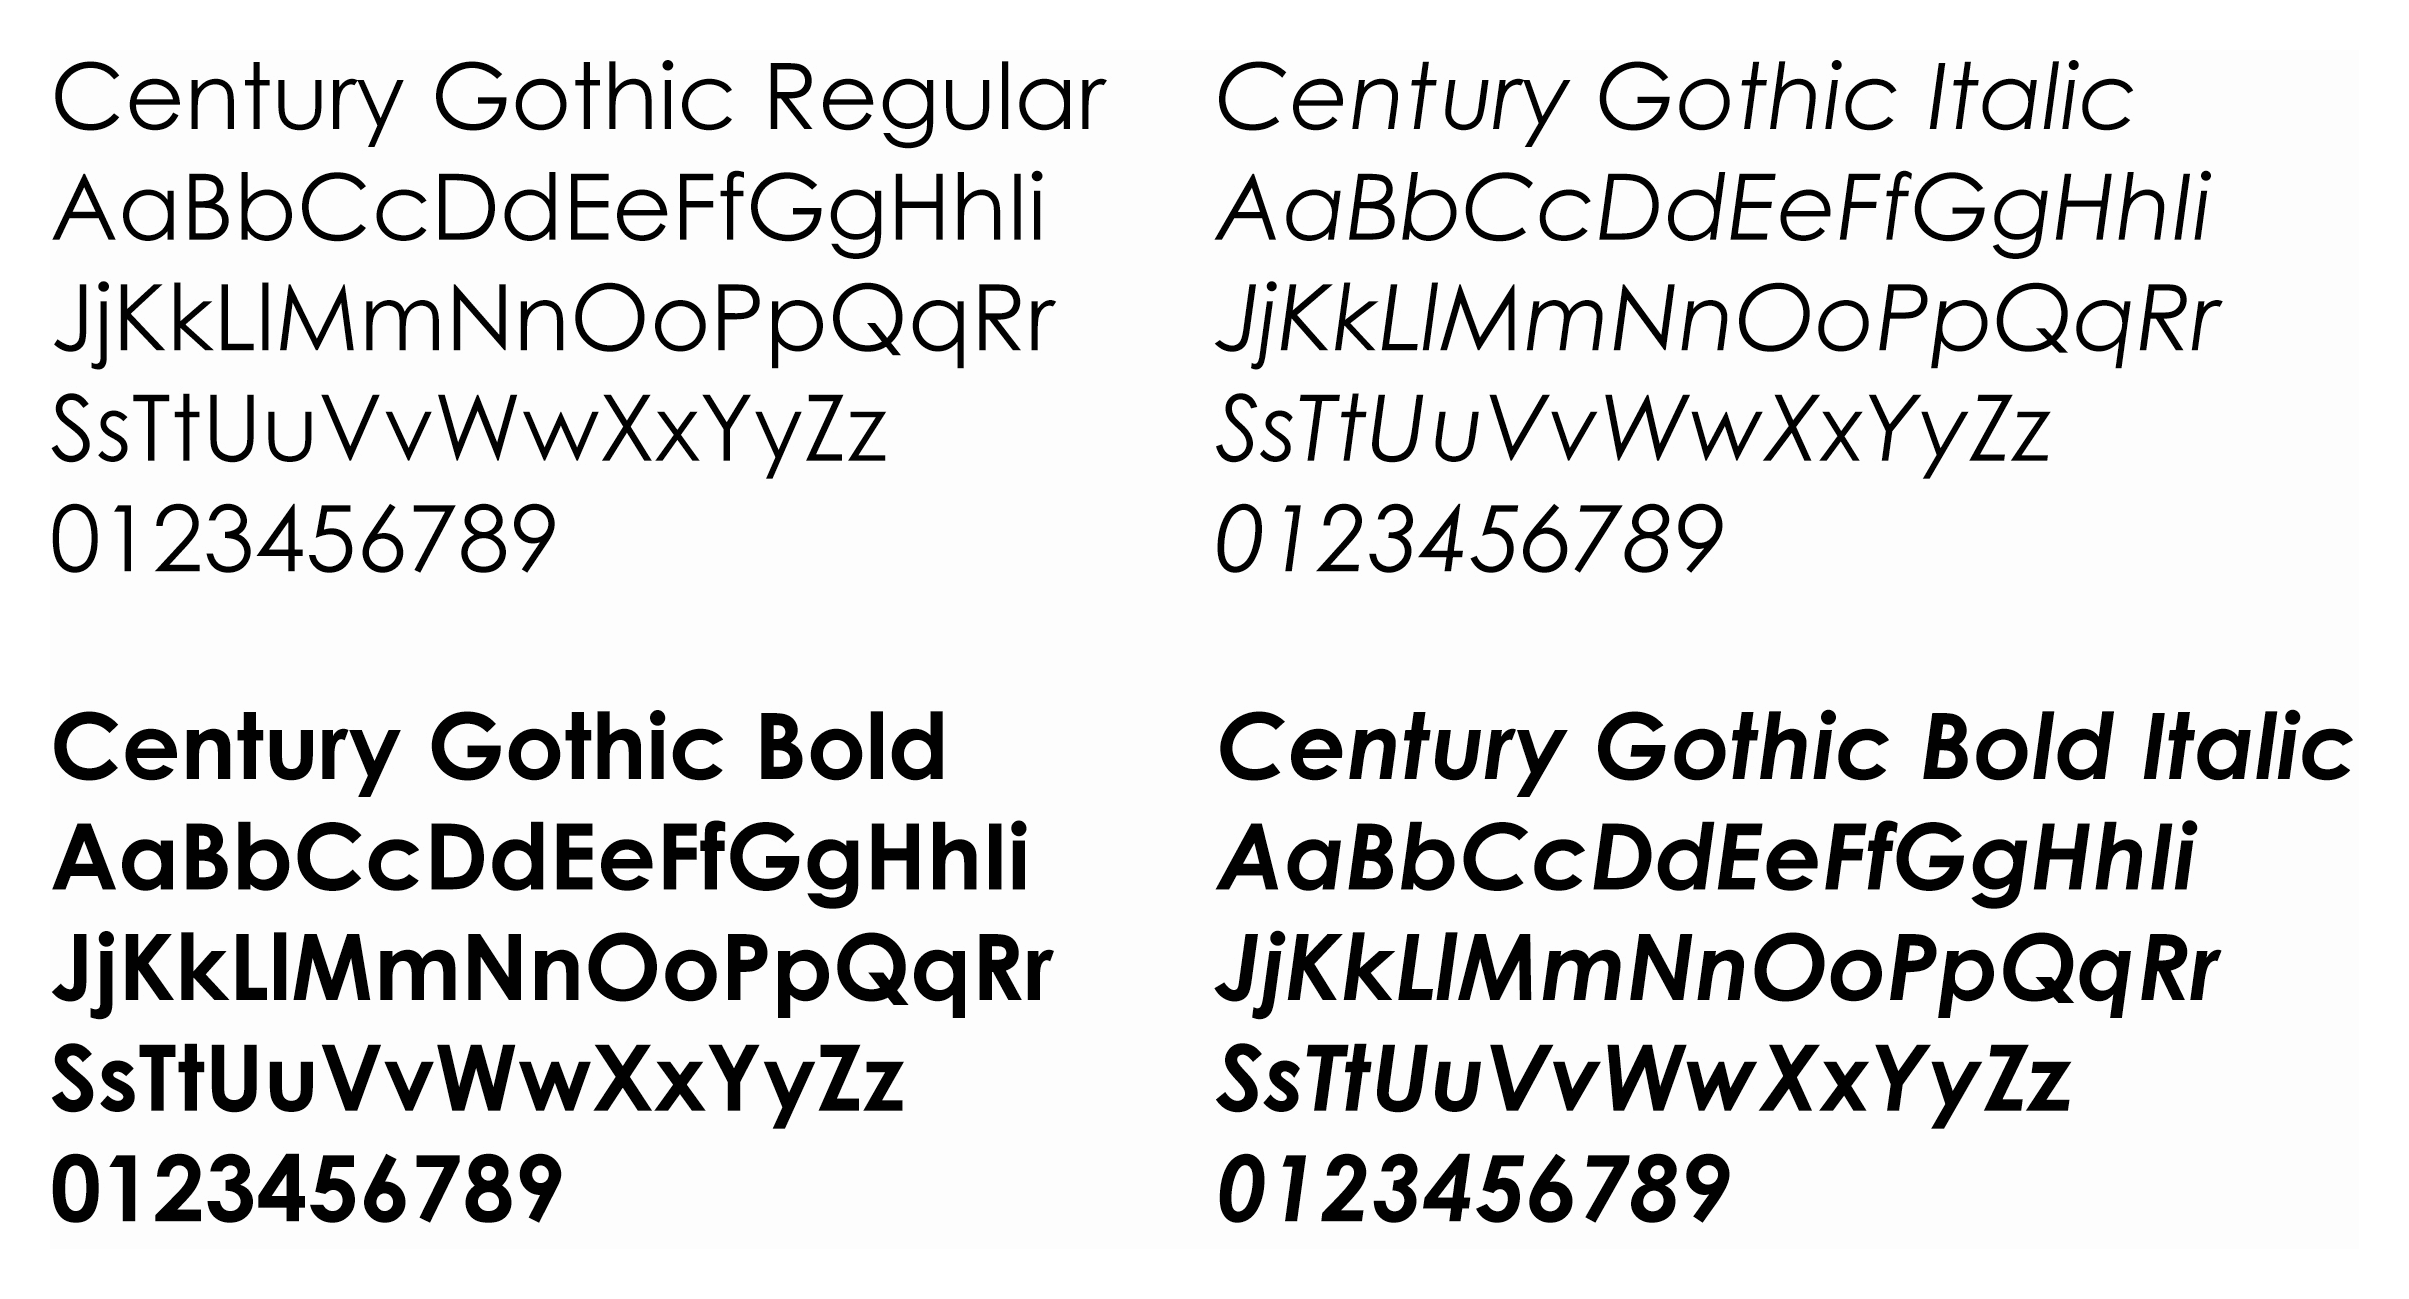 download century gothic font on mac photoshop